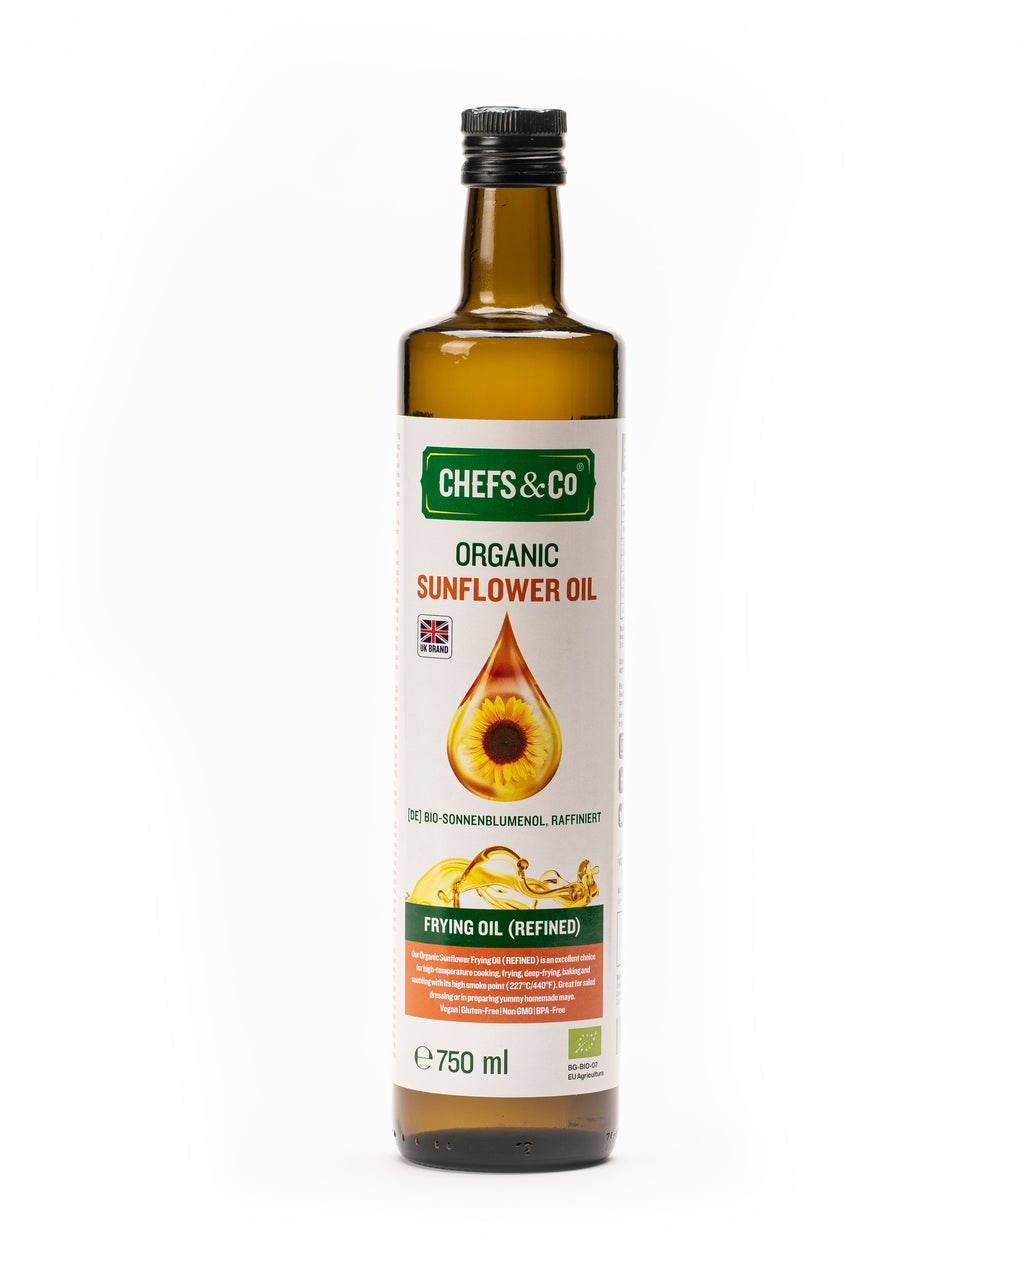 CHEFS & CO Organic Sunflower FRYING Oil ( Refined )